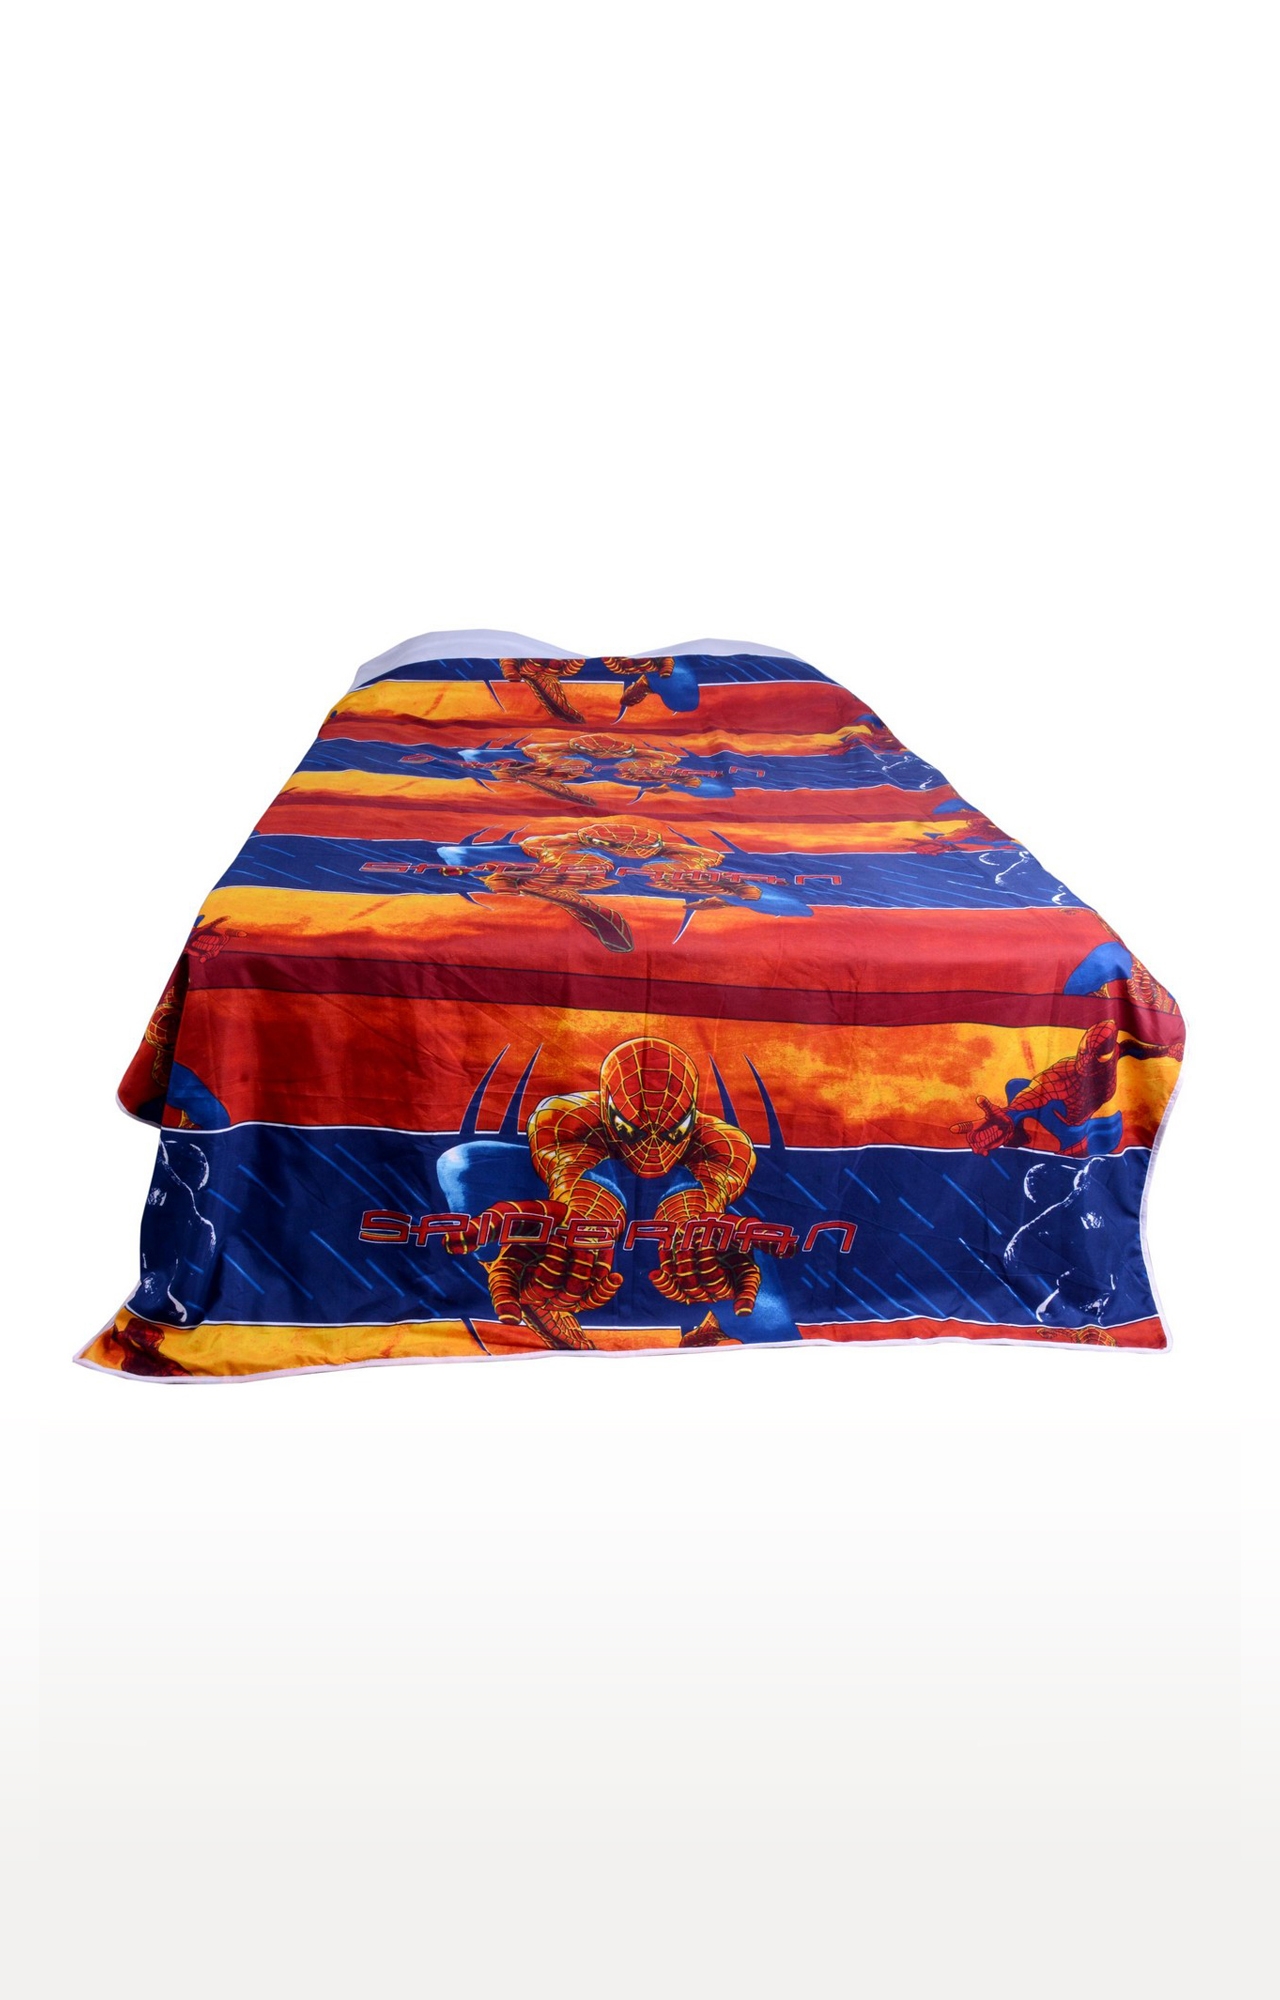 V Brown | Spiderman Printed Cotton 3 Layer Single Bed Quilt Dohar